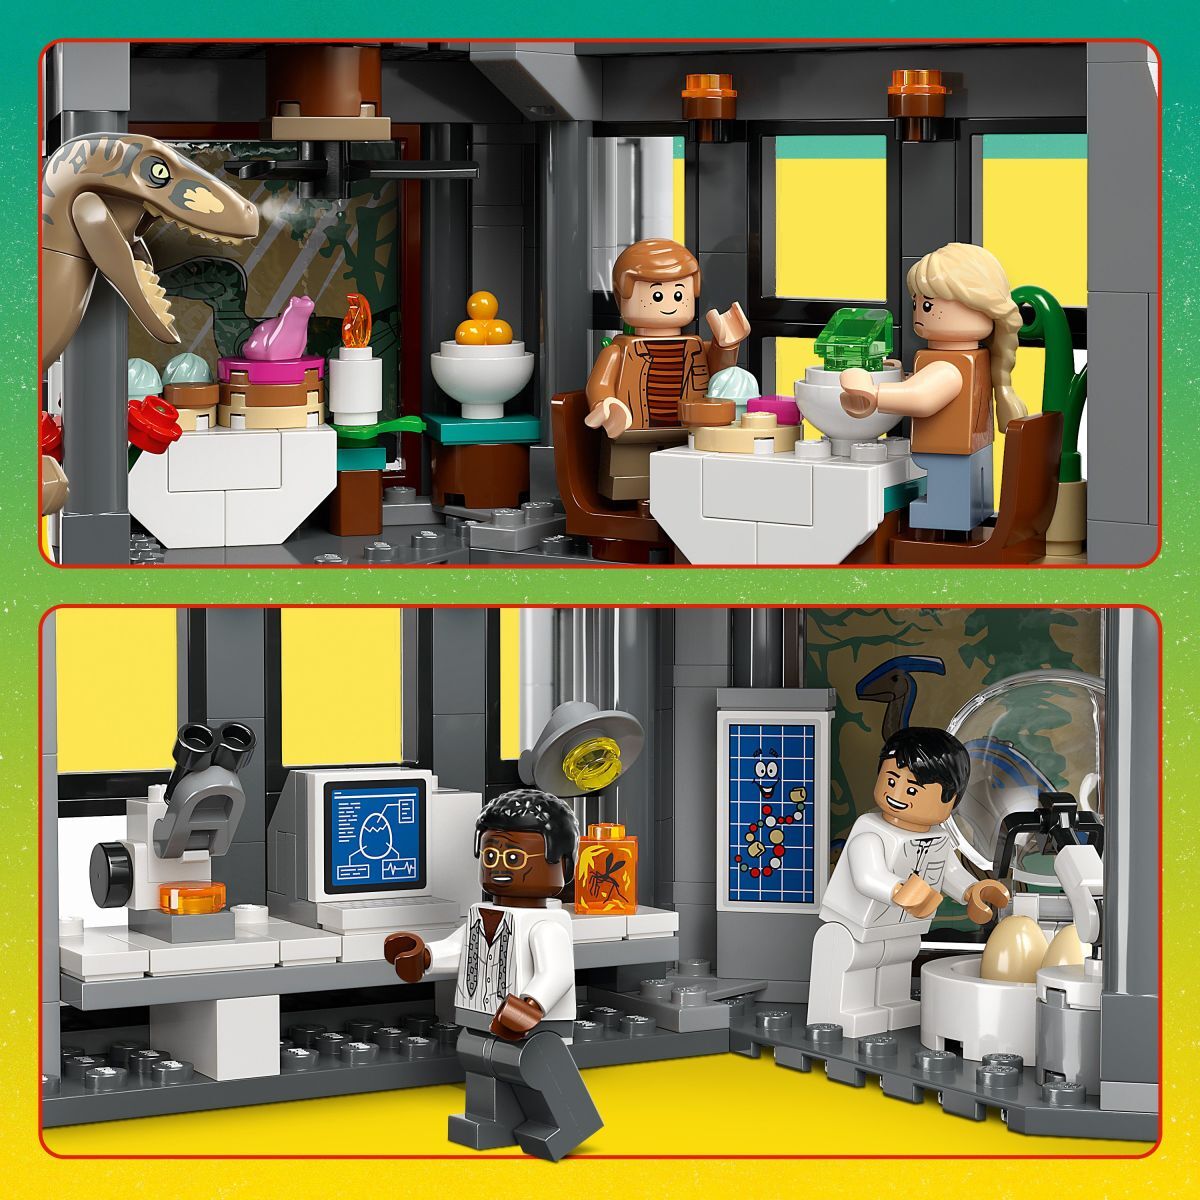 LEGO® Jurassic World: Visitor Center: T-Rex & Raptor Attack